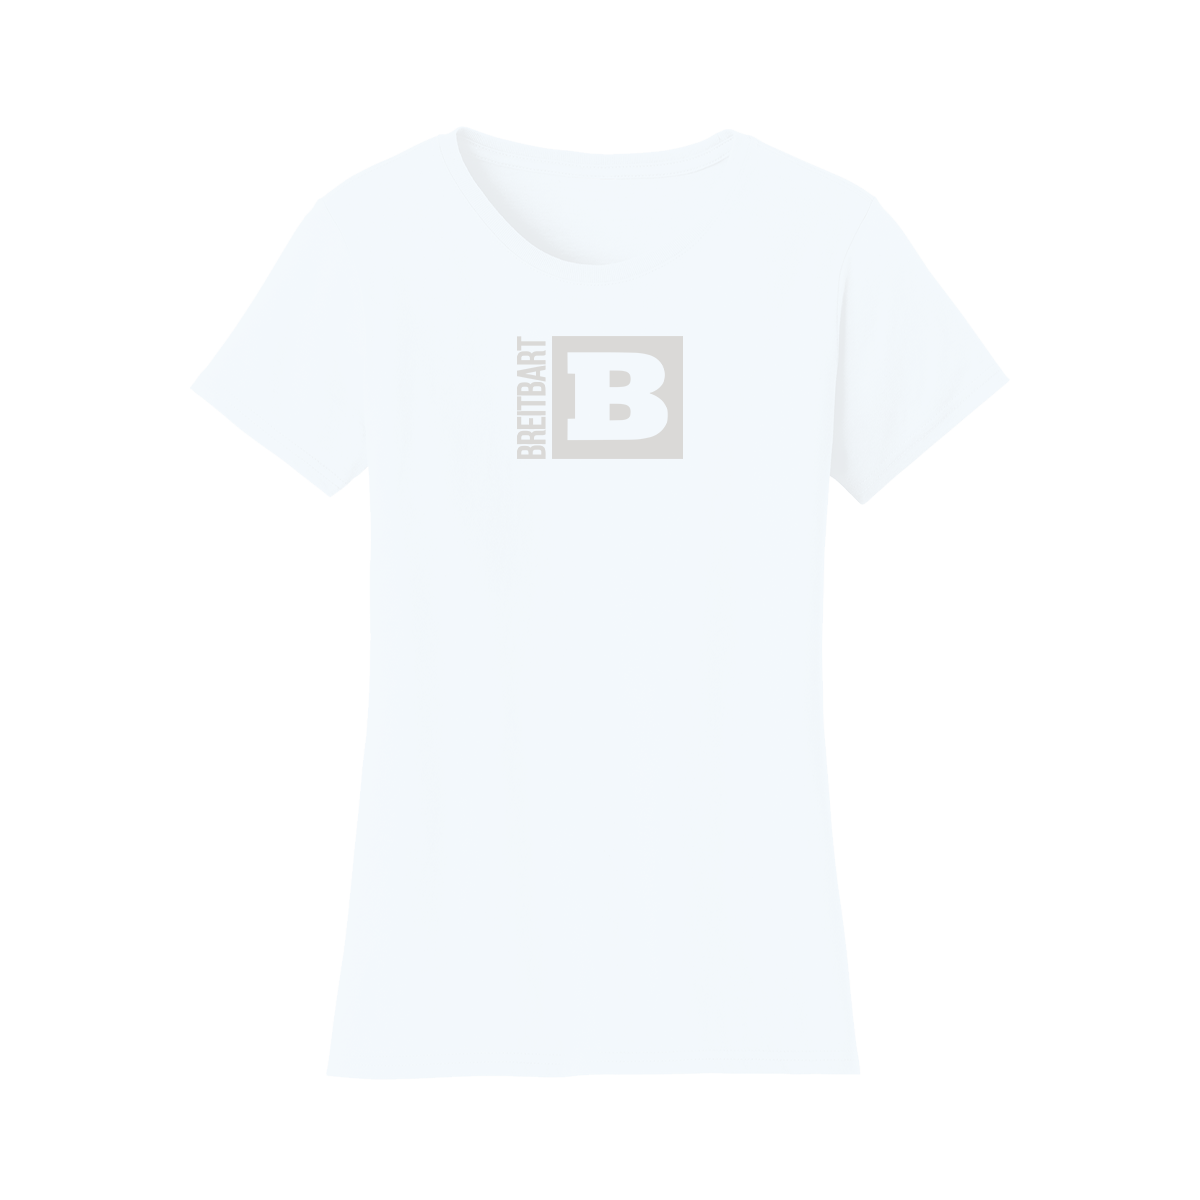 Official Breitbart Logo Women's T-Shirt - White